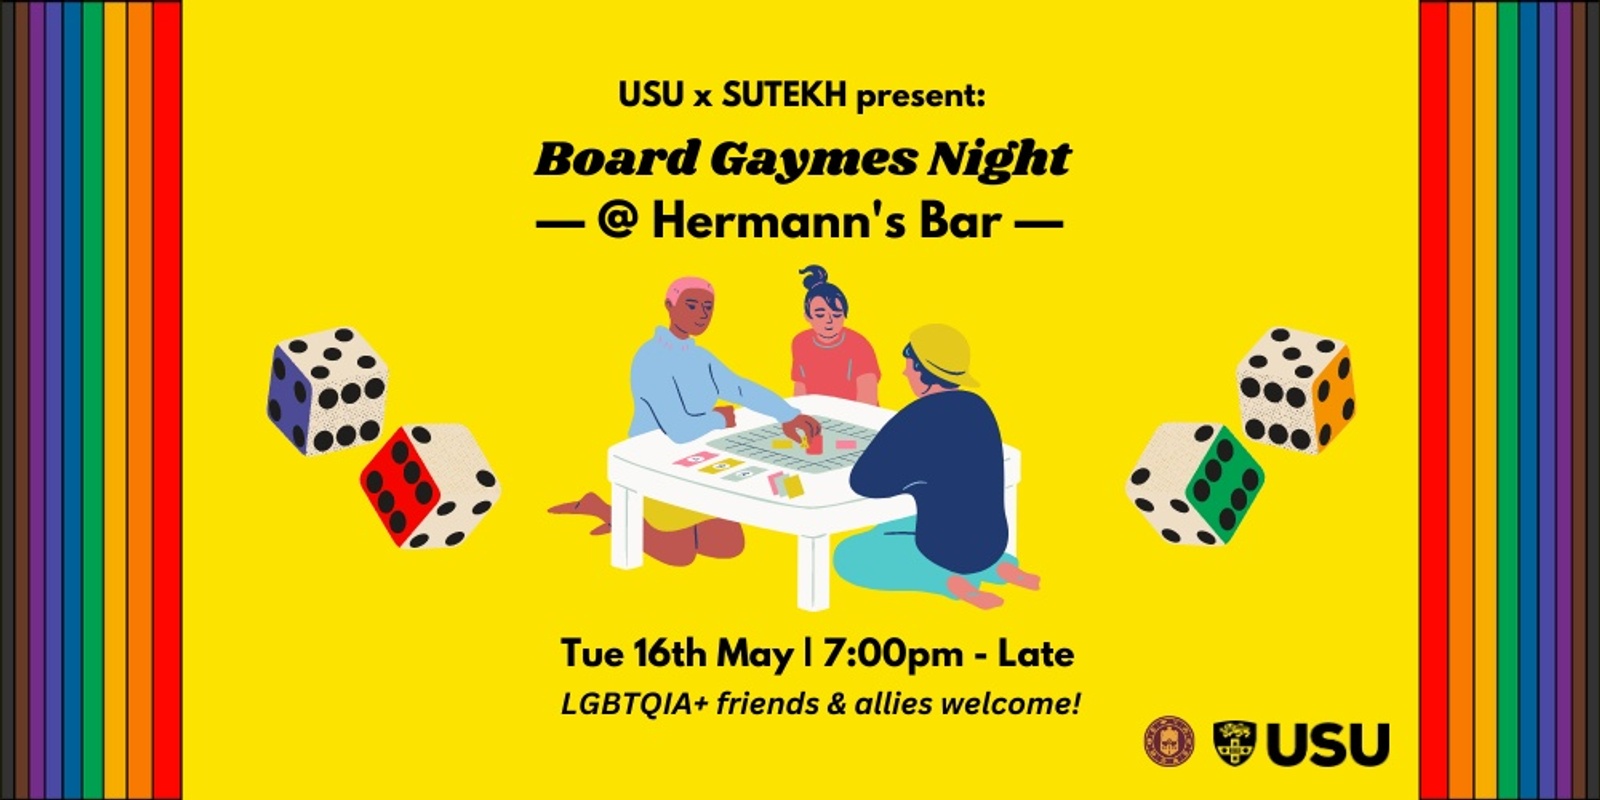 Banner image for USU x SUTEKH Board Gaymes Night @ Hermann's